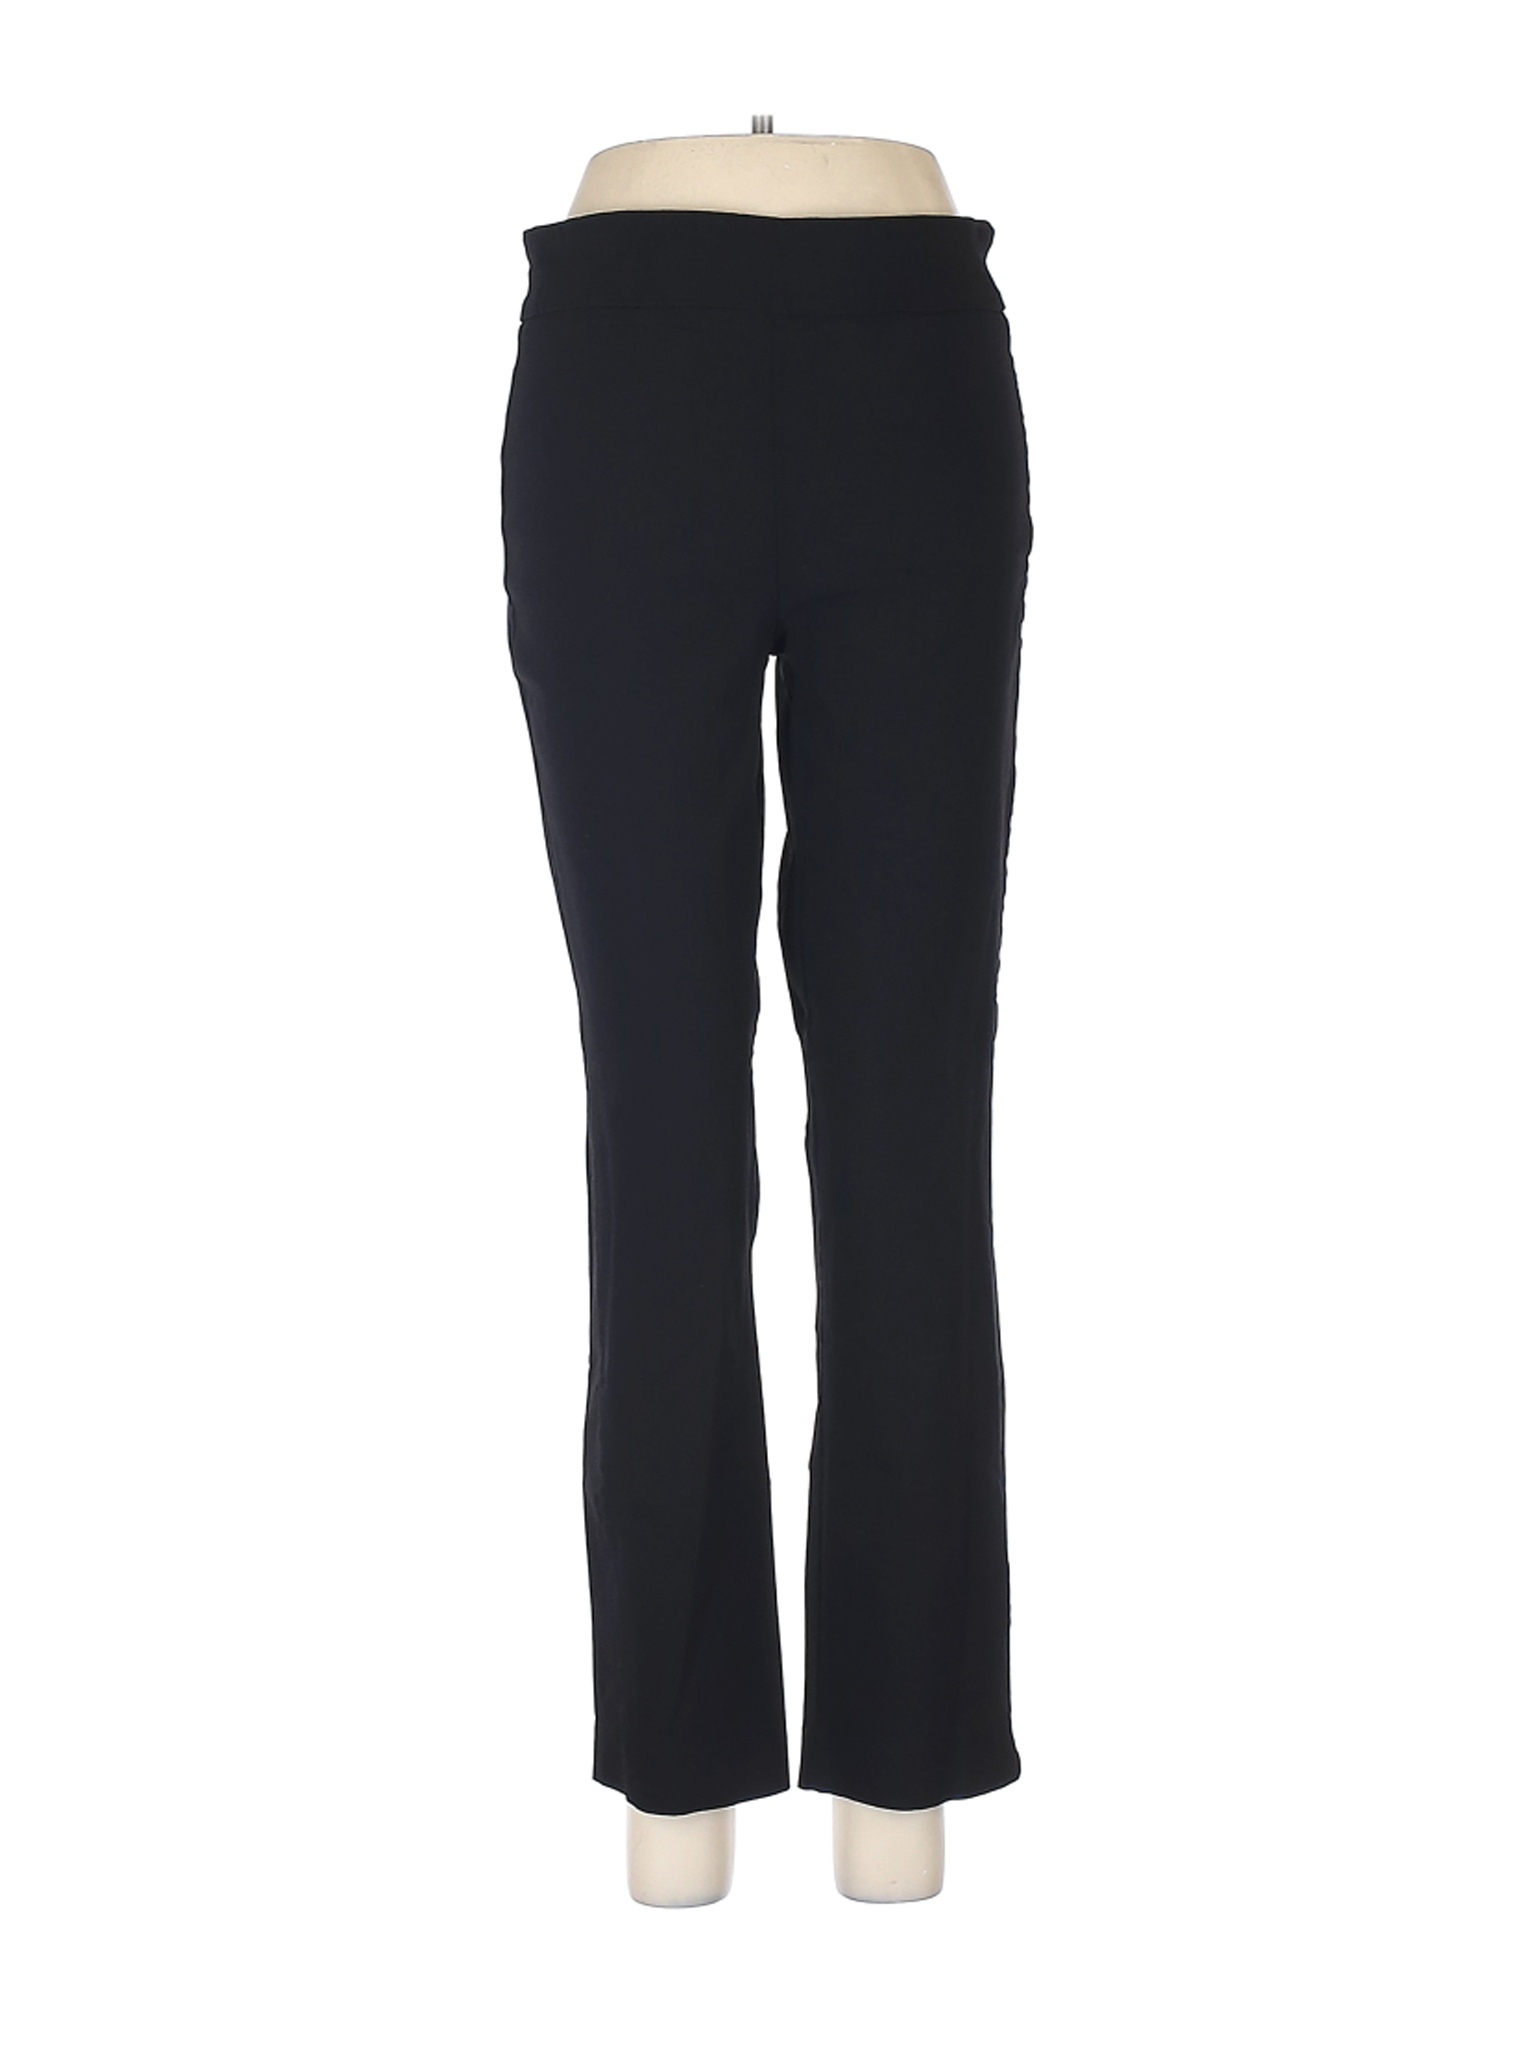 Harve Benard Women Black Casual Pants 8 | eBay